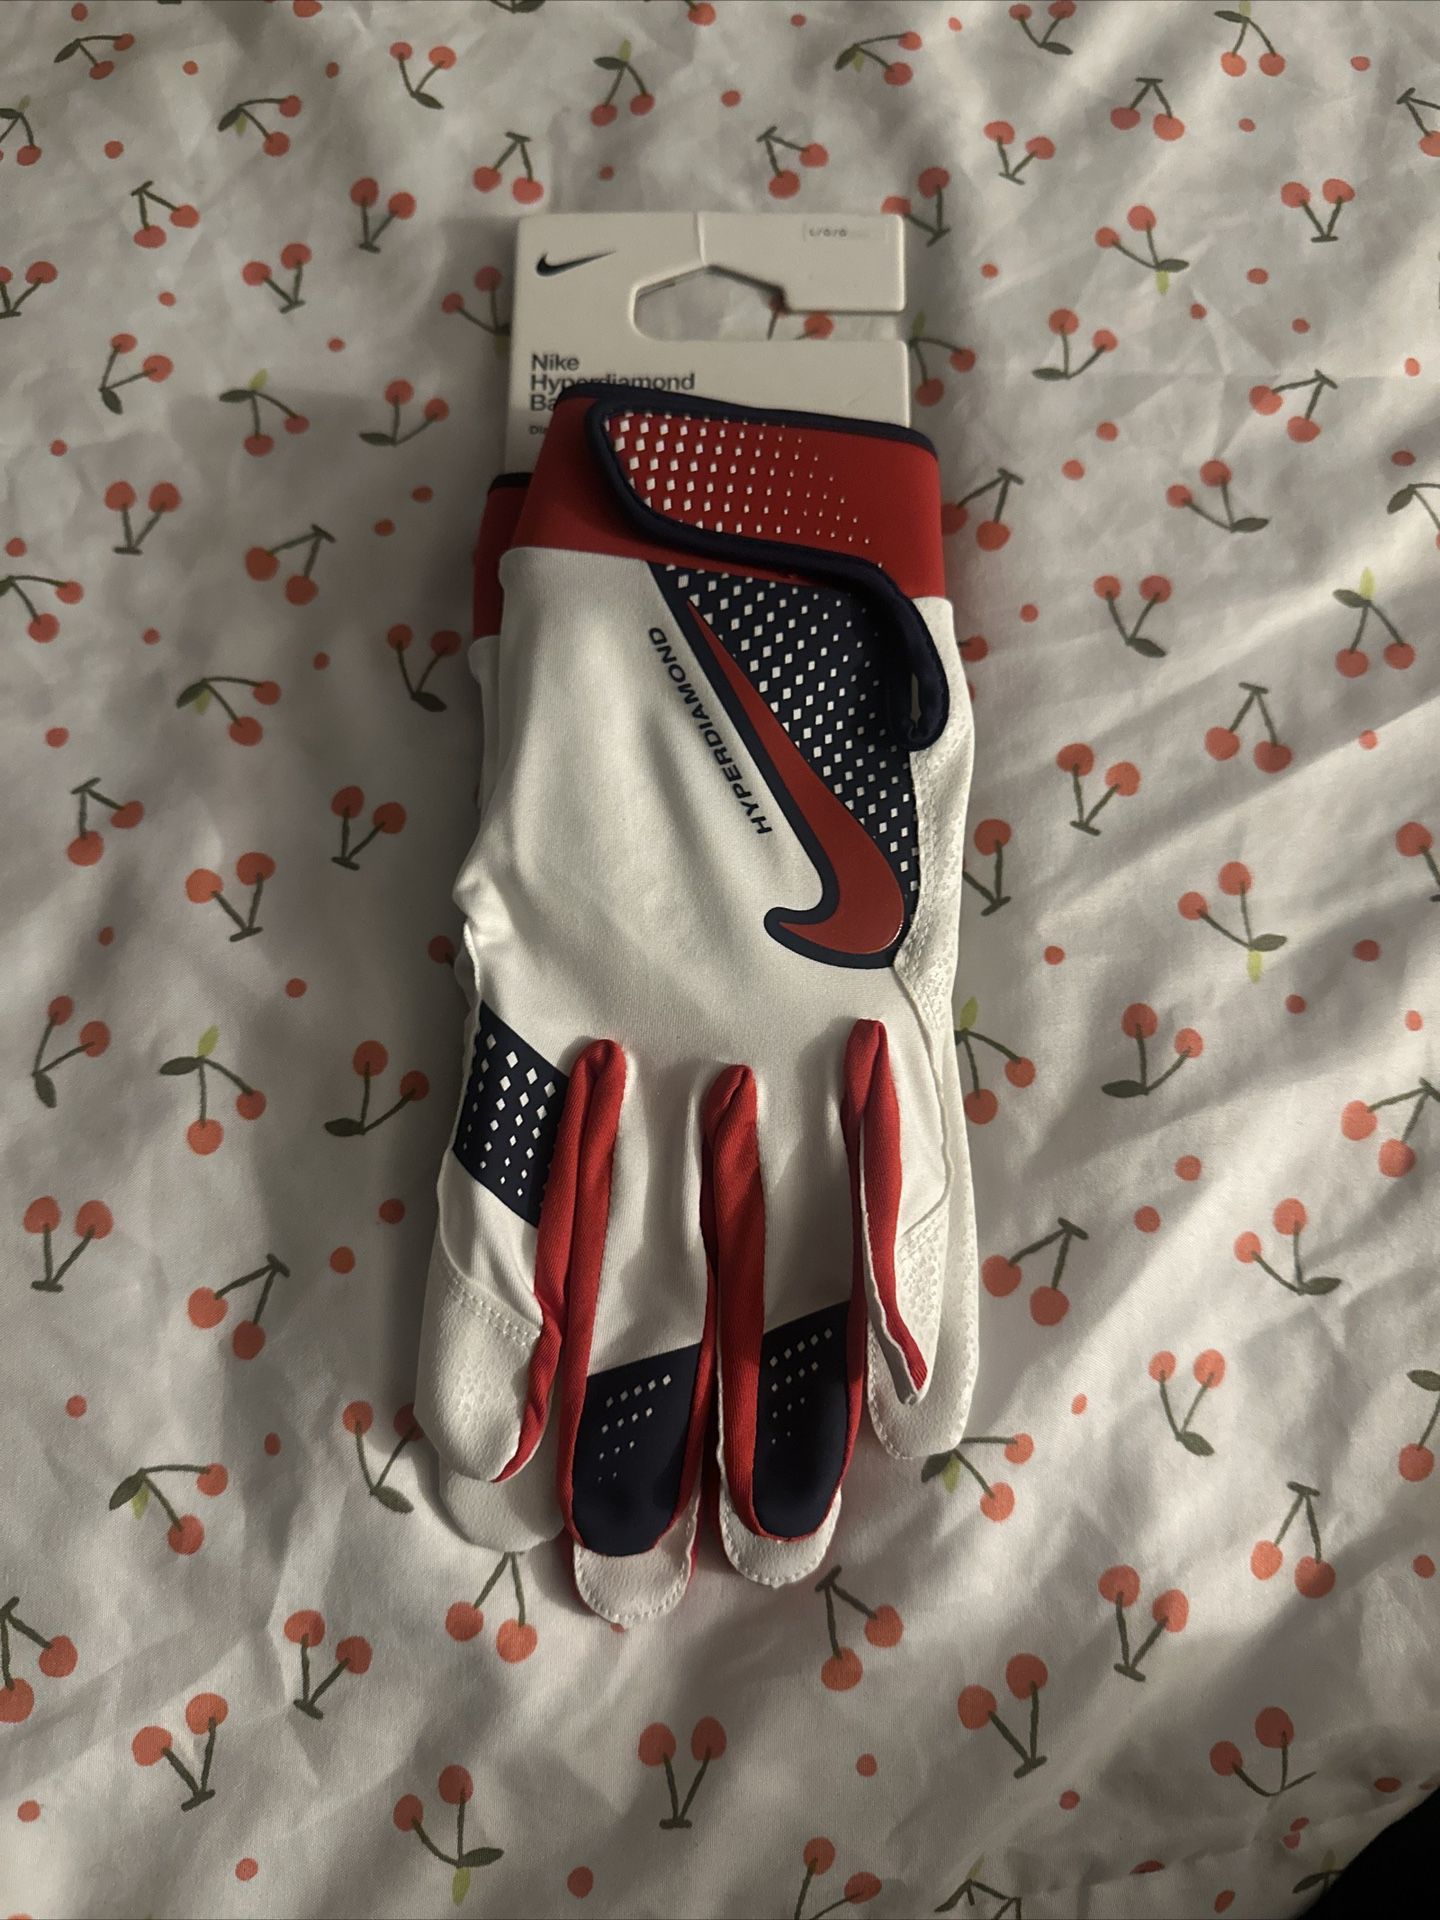 Nike Hyperdiamond Softball/Baseball Batting Gloves Size Large Navy White NEW